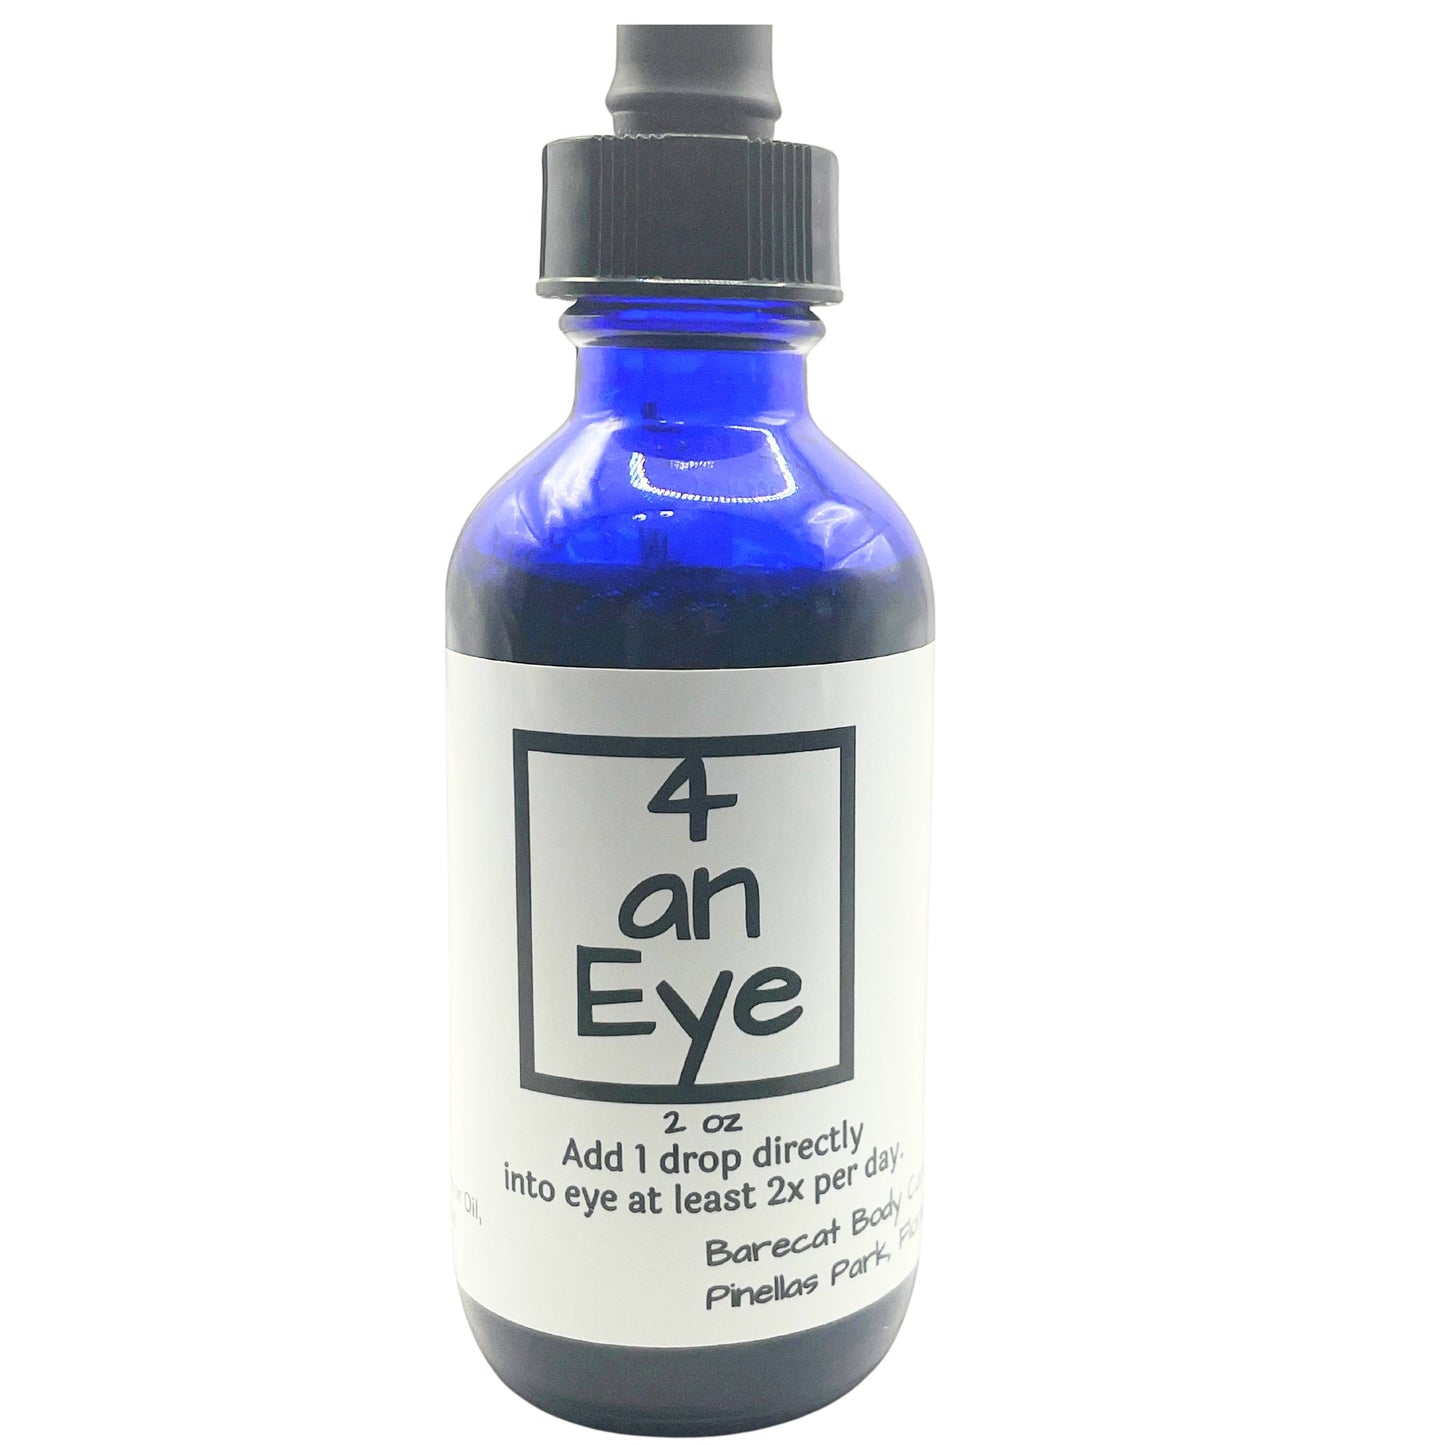 4 an Eye eye health solution bottle with distinctive labeling